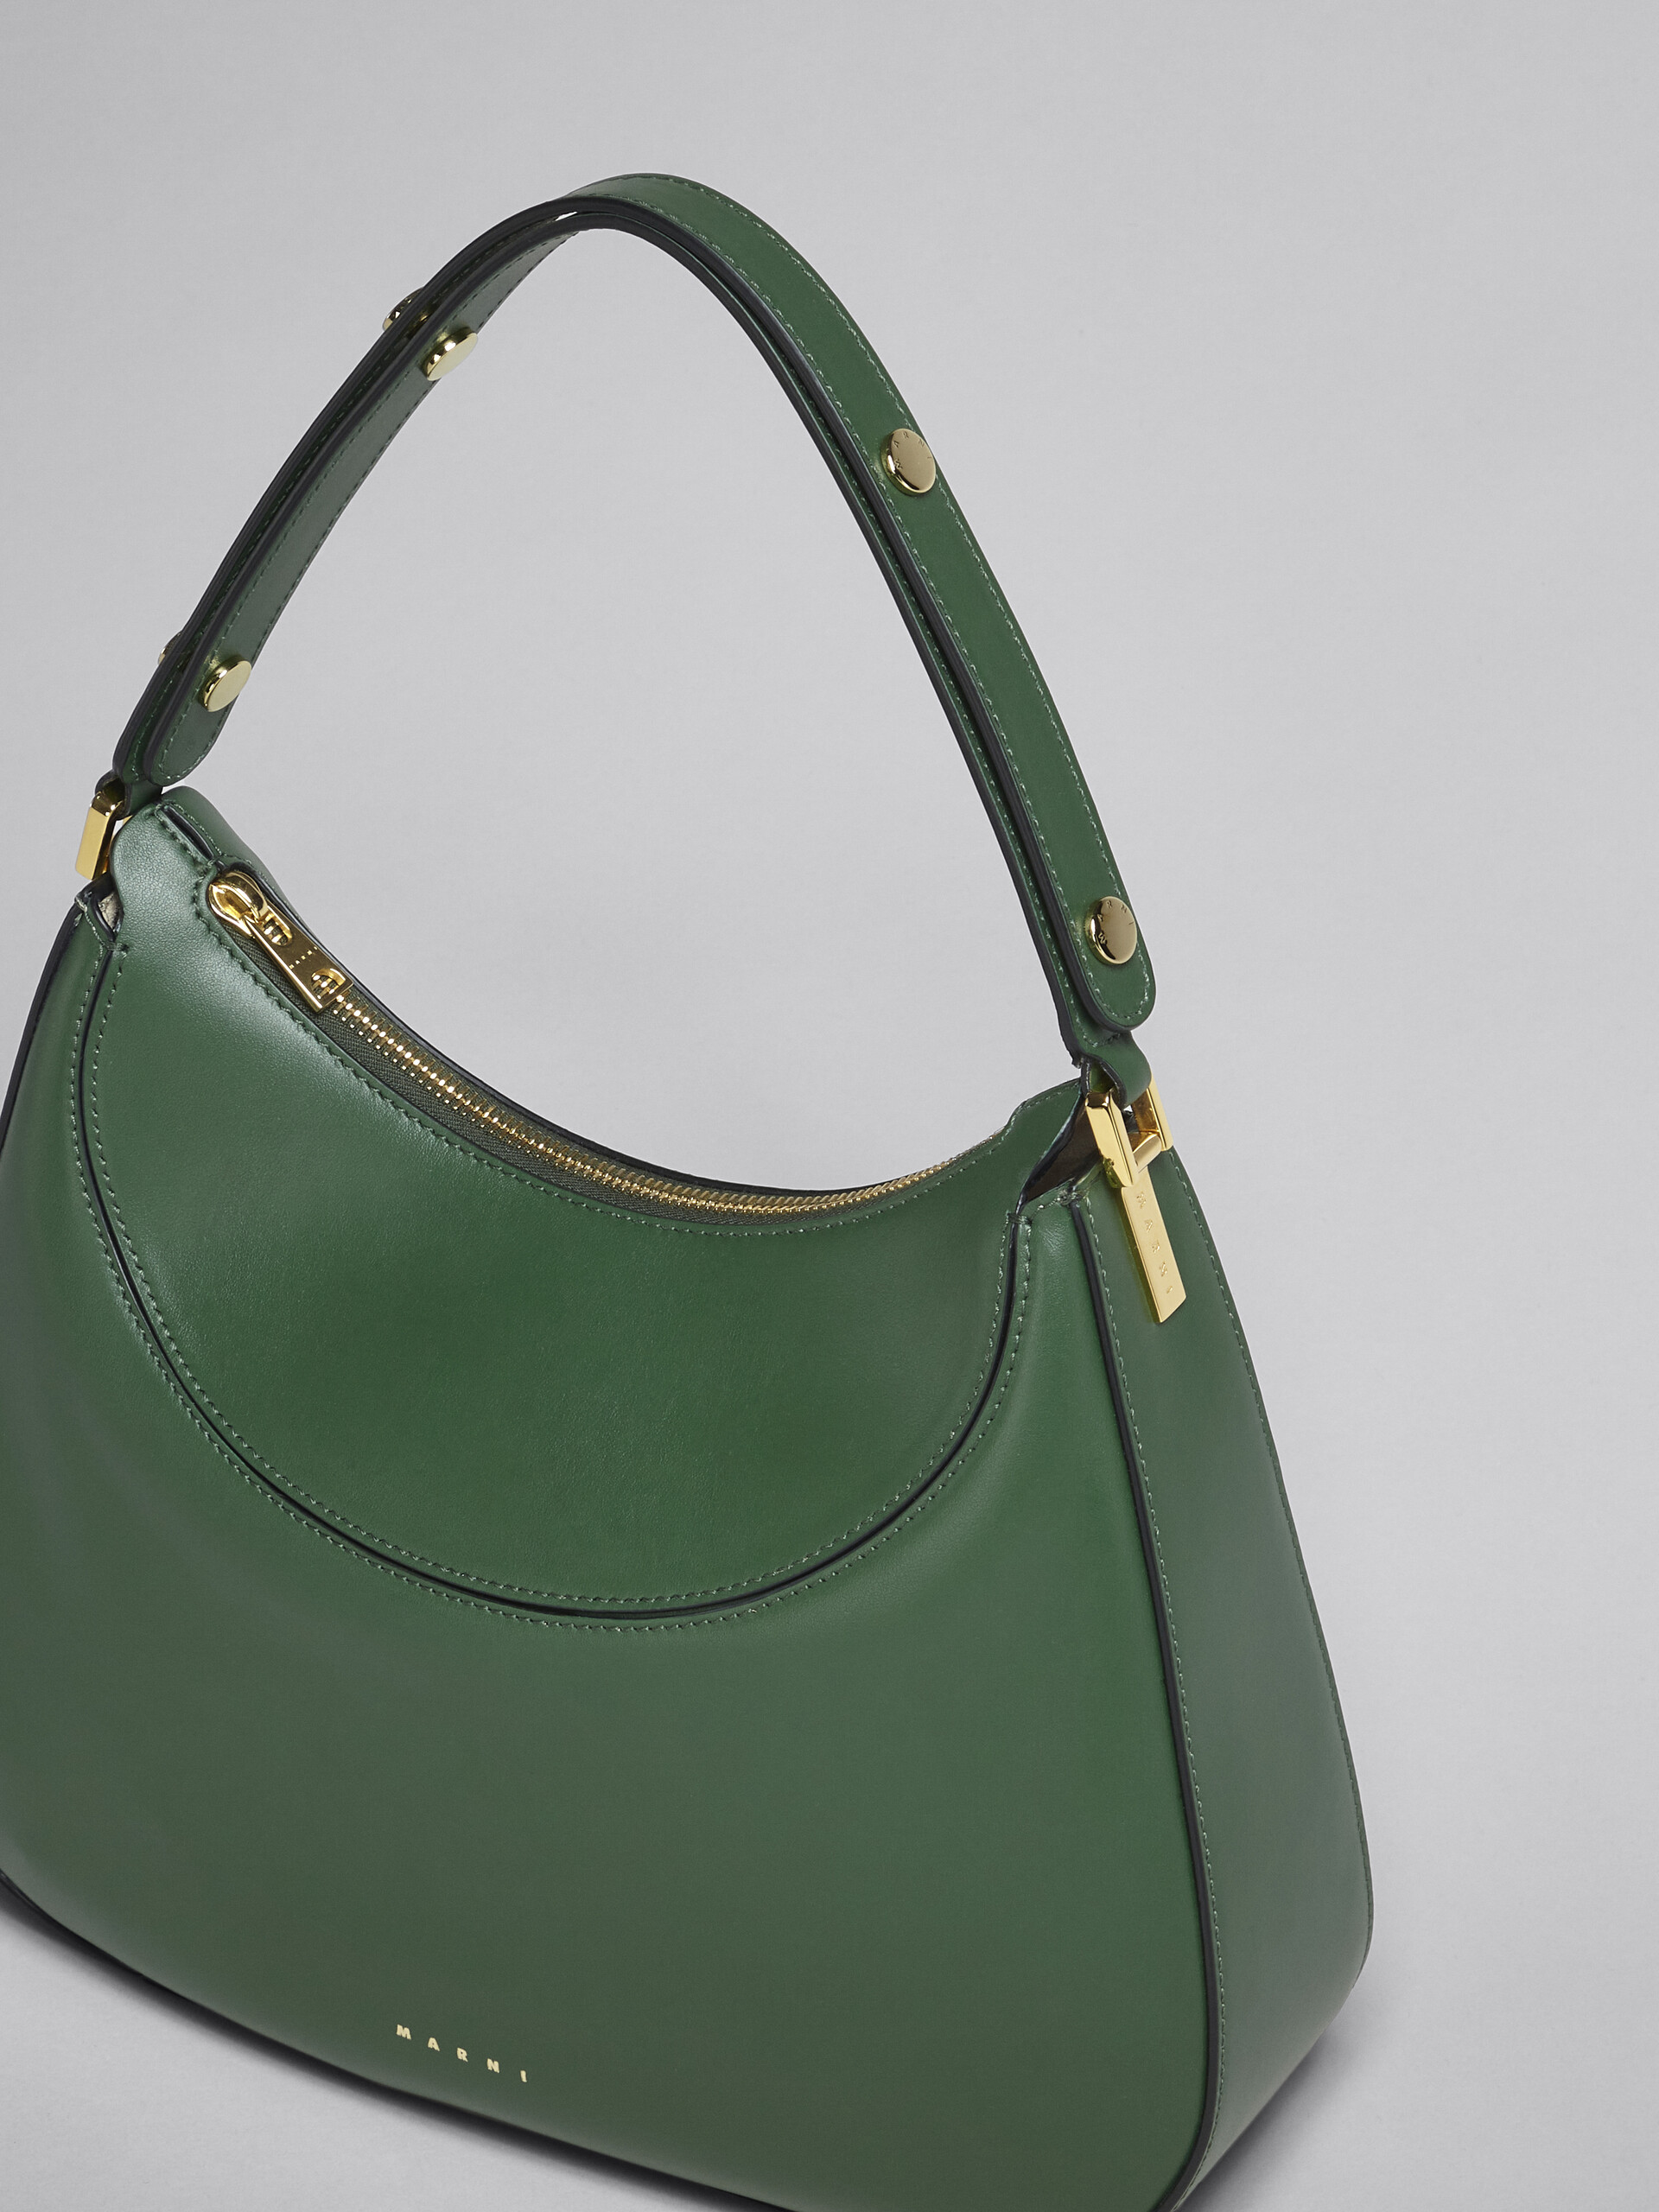 Milano large bag in green leather - Handbag - Image 5